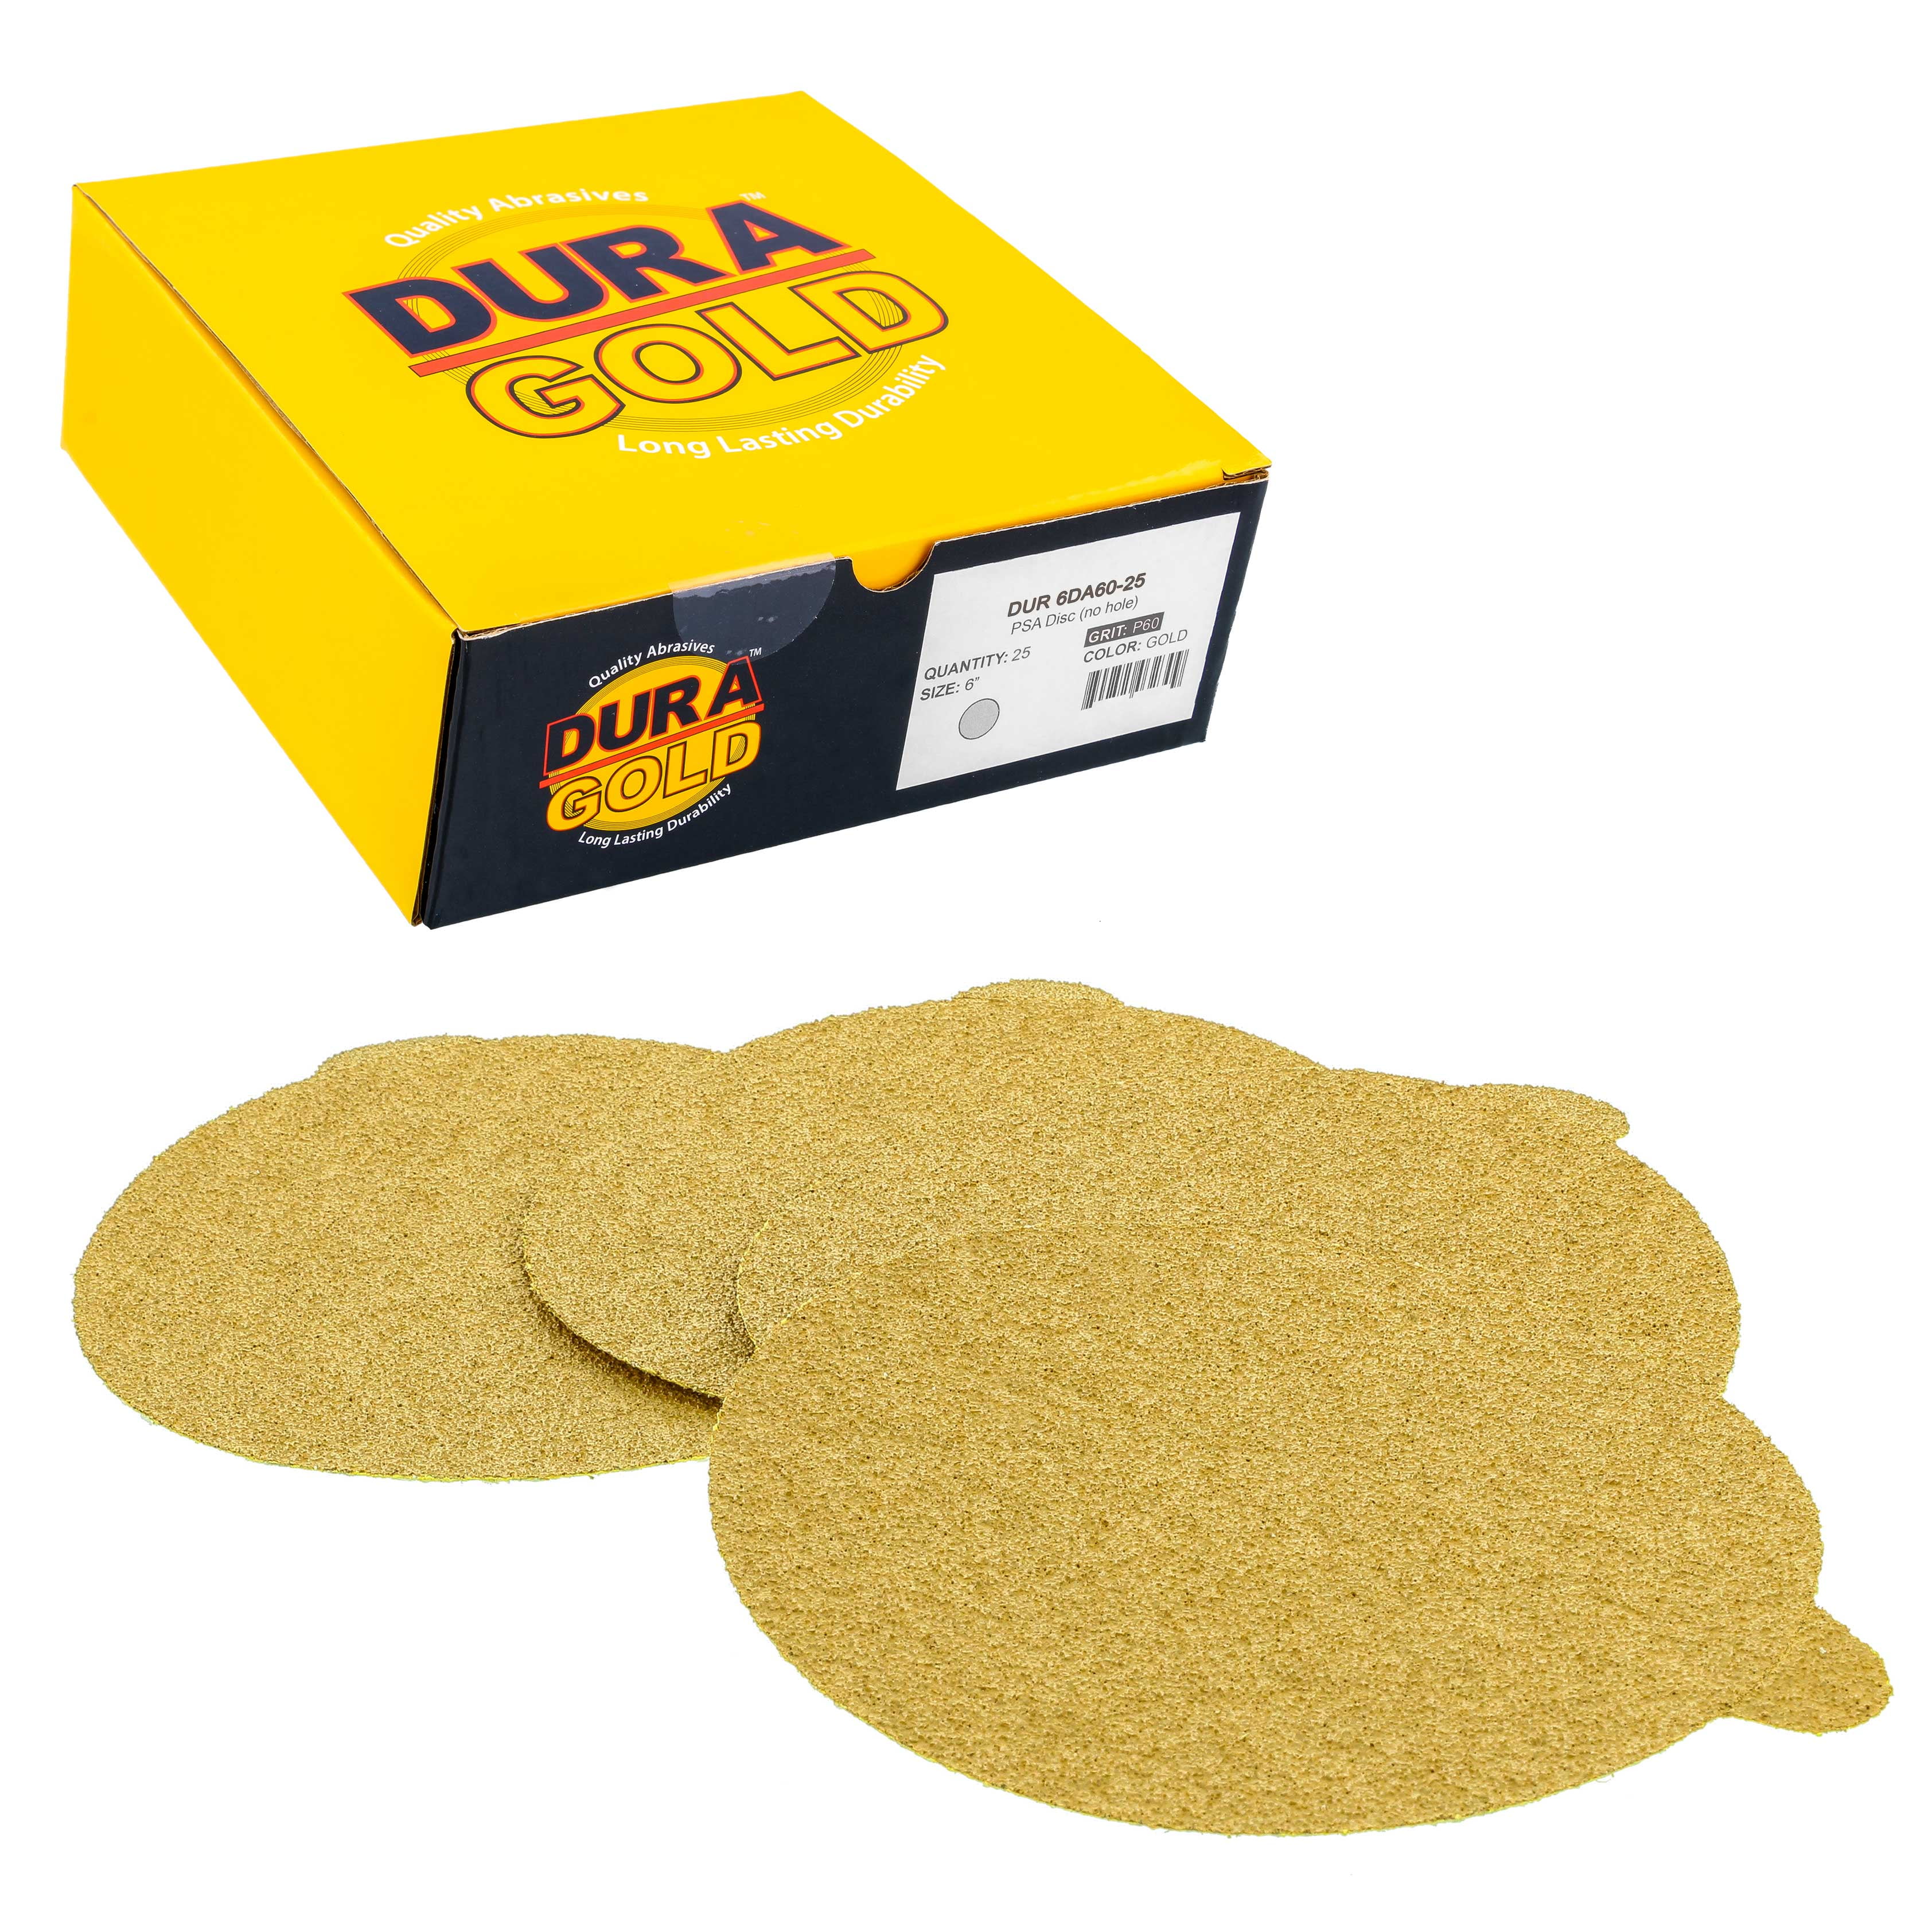 Dura-Gold Premium 180 Grit 6" Gold PSA Self Adhesive Stickyback Sanding D... 